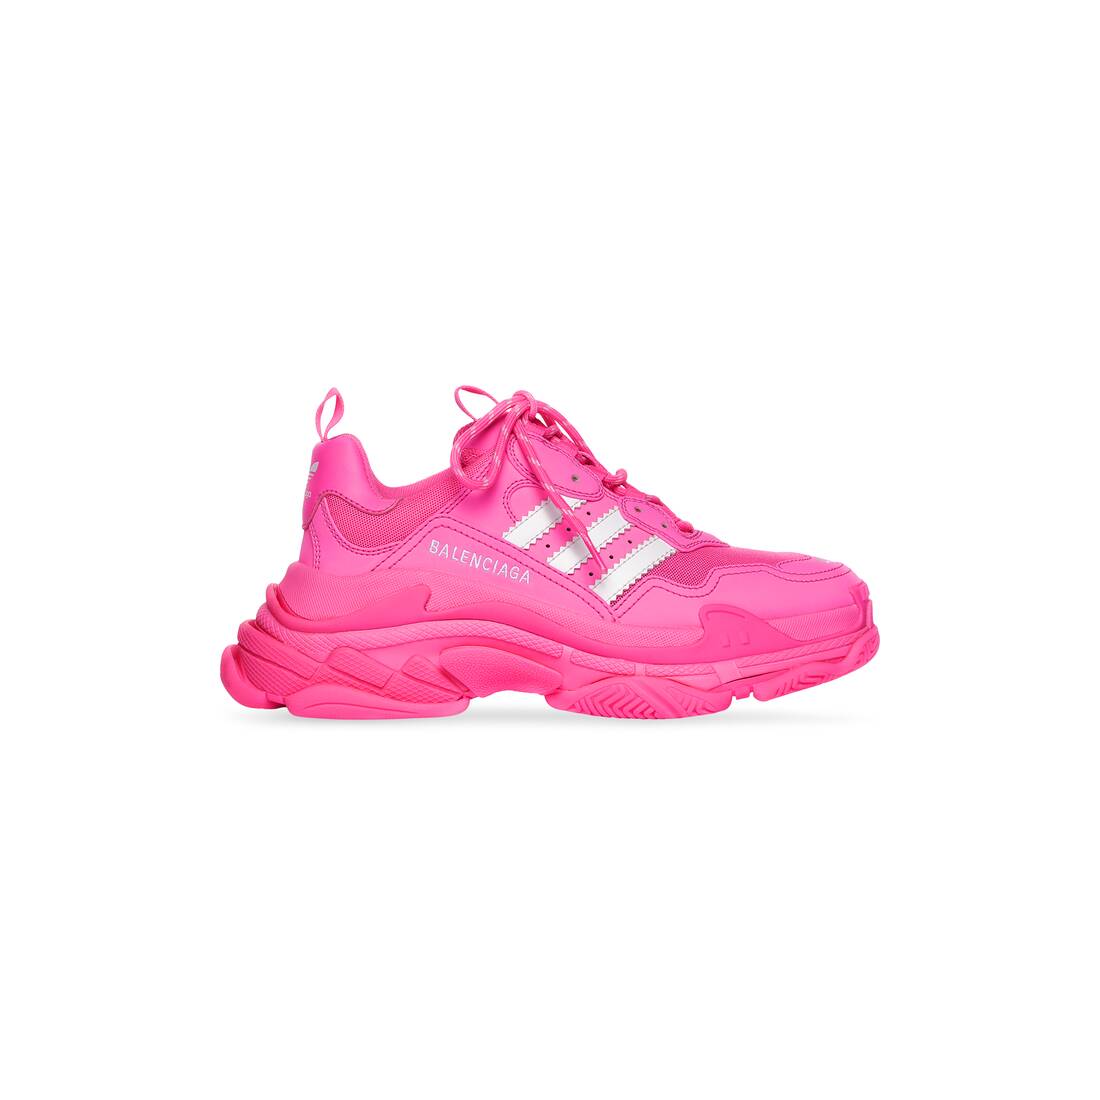 Zapatillas S / Adidas para Mujer en Rosa | Balenciaga